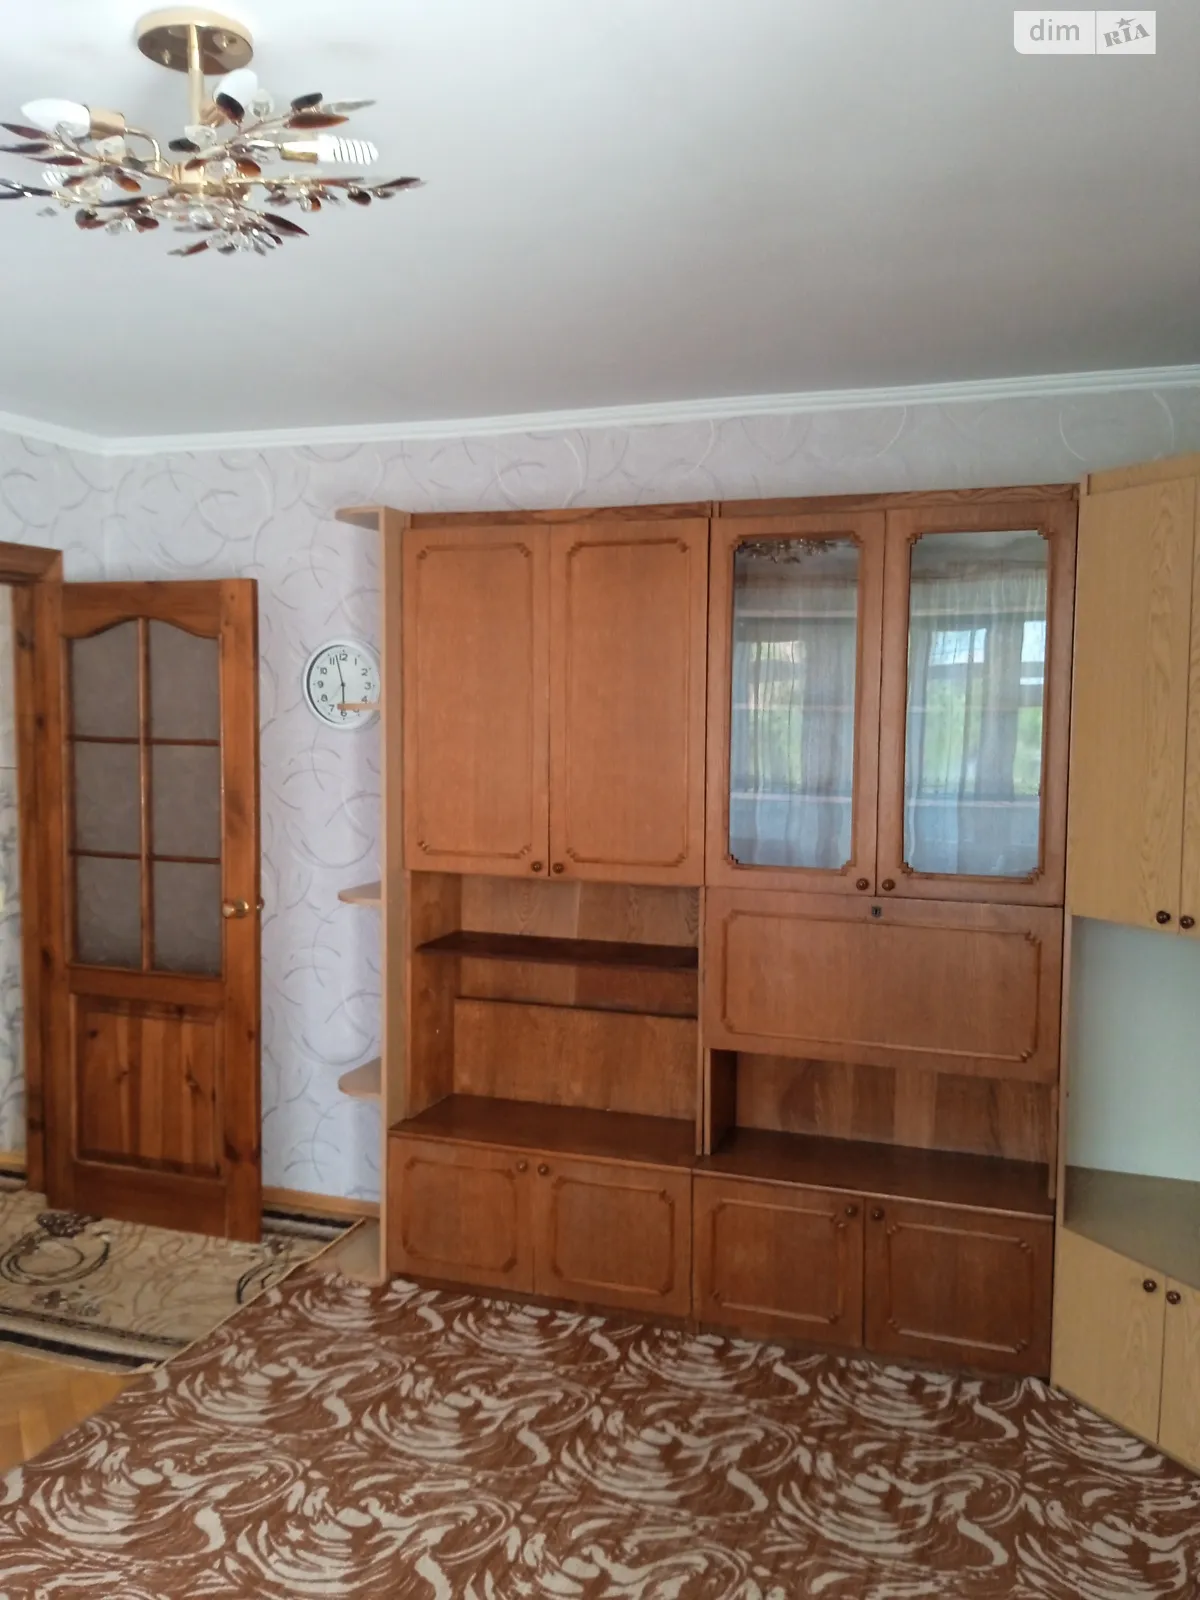 1-кімнатна квартира 38 кв. м у Луцьку, цена: 8000 грн